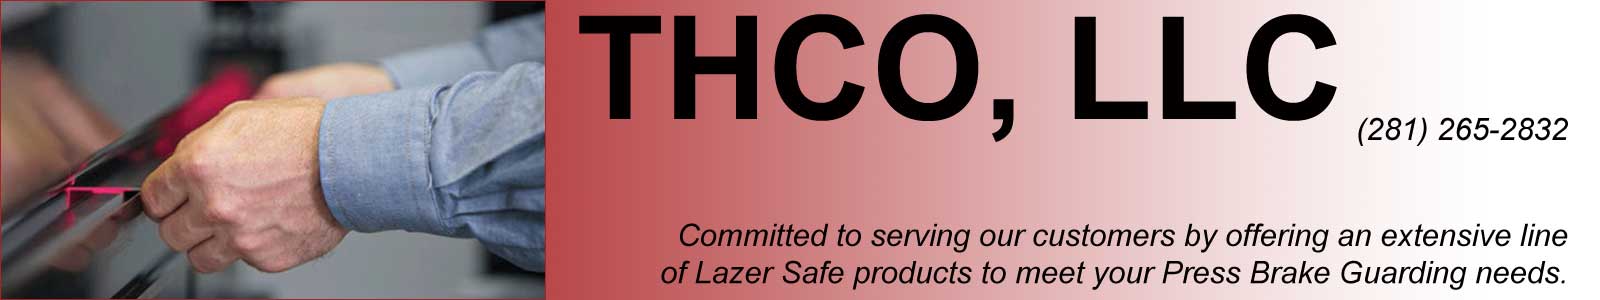 THCO LLC